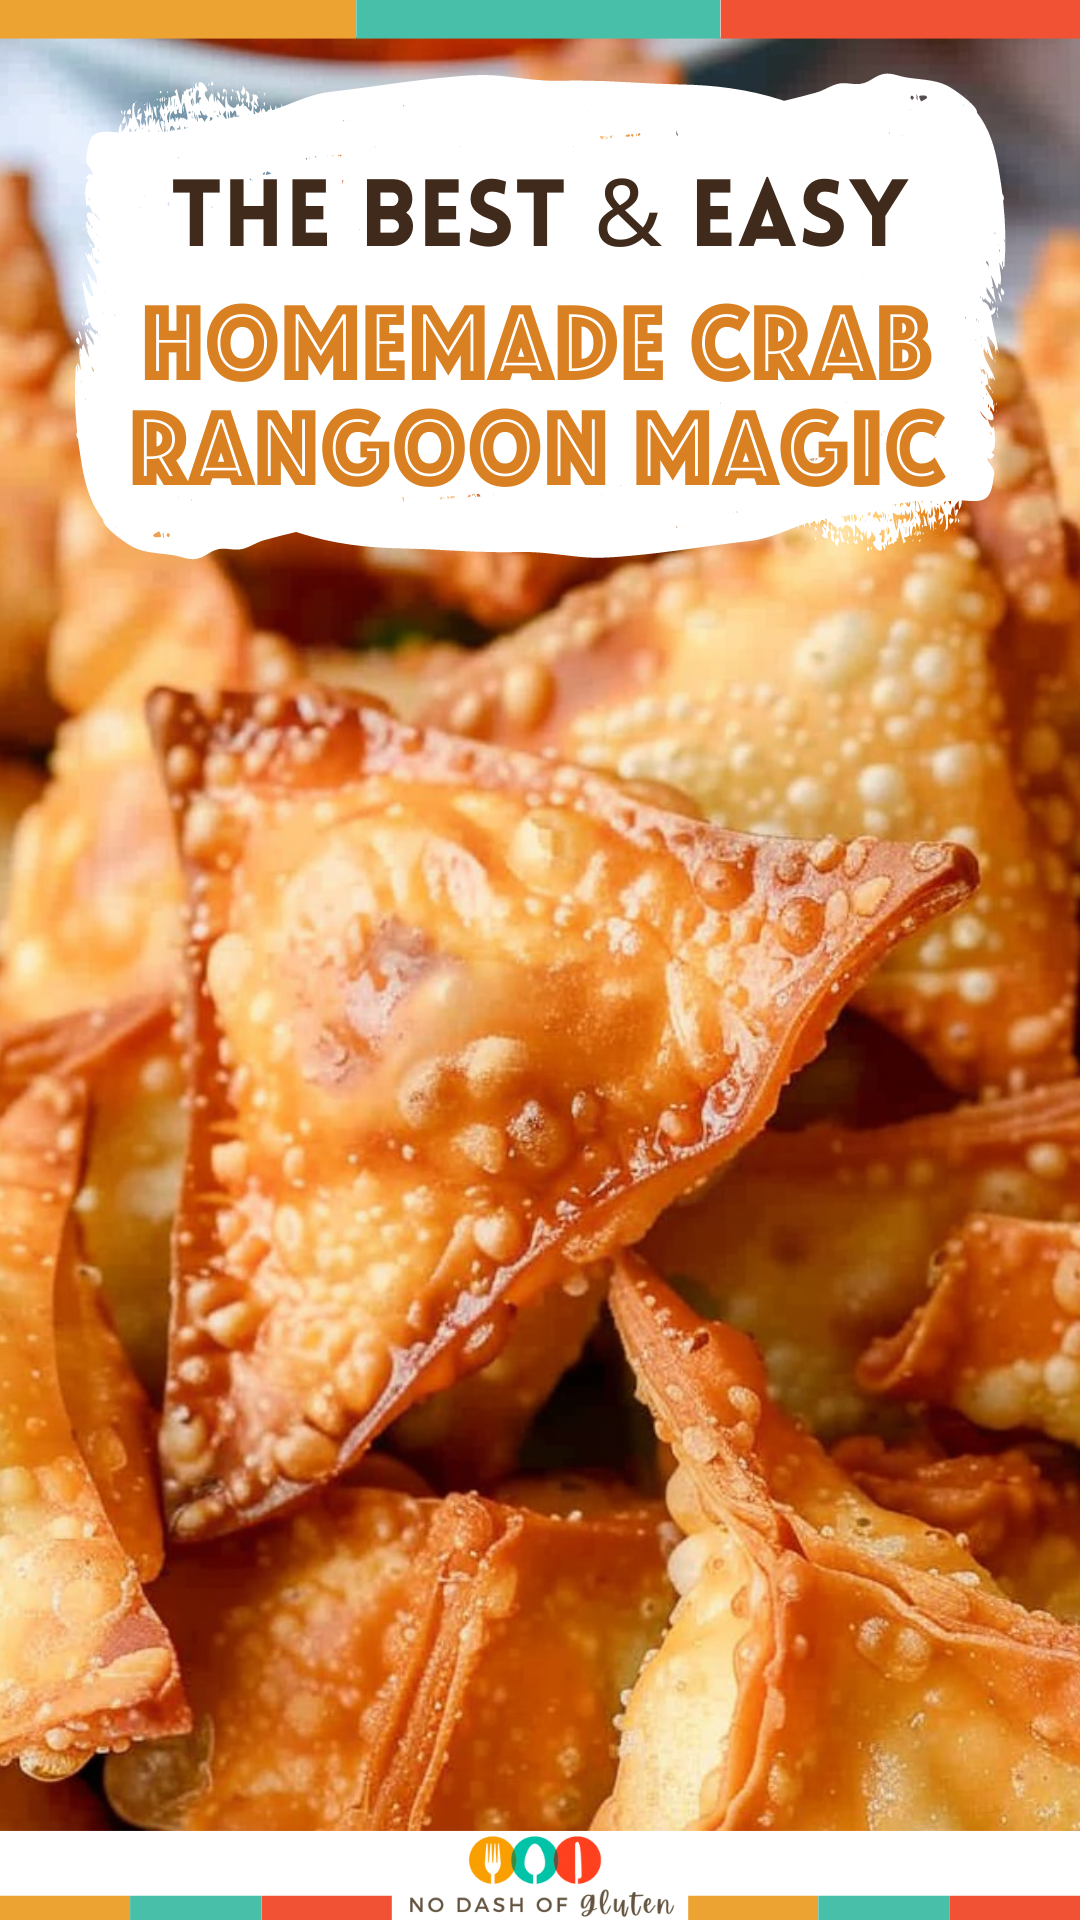 Homemade Crab Rangoon Magic